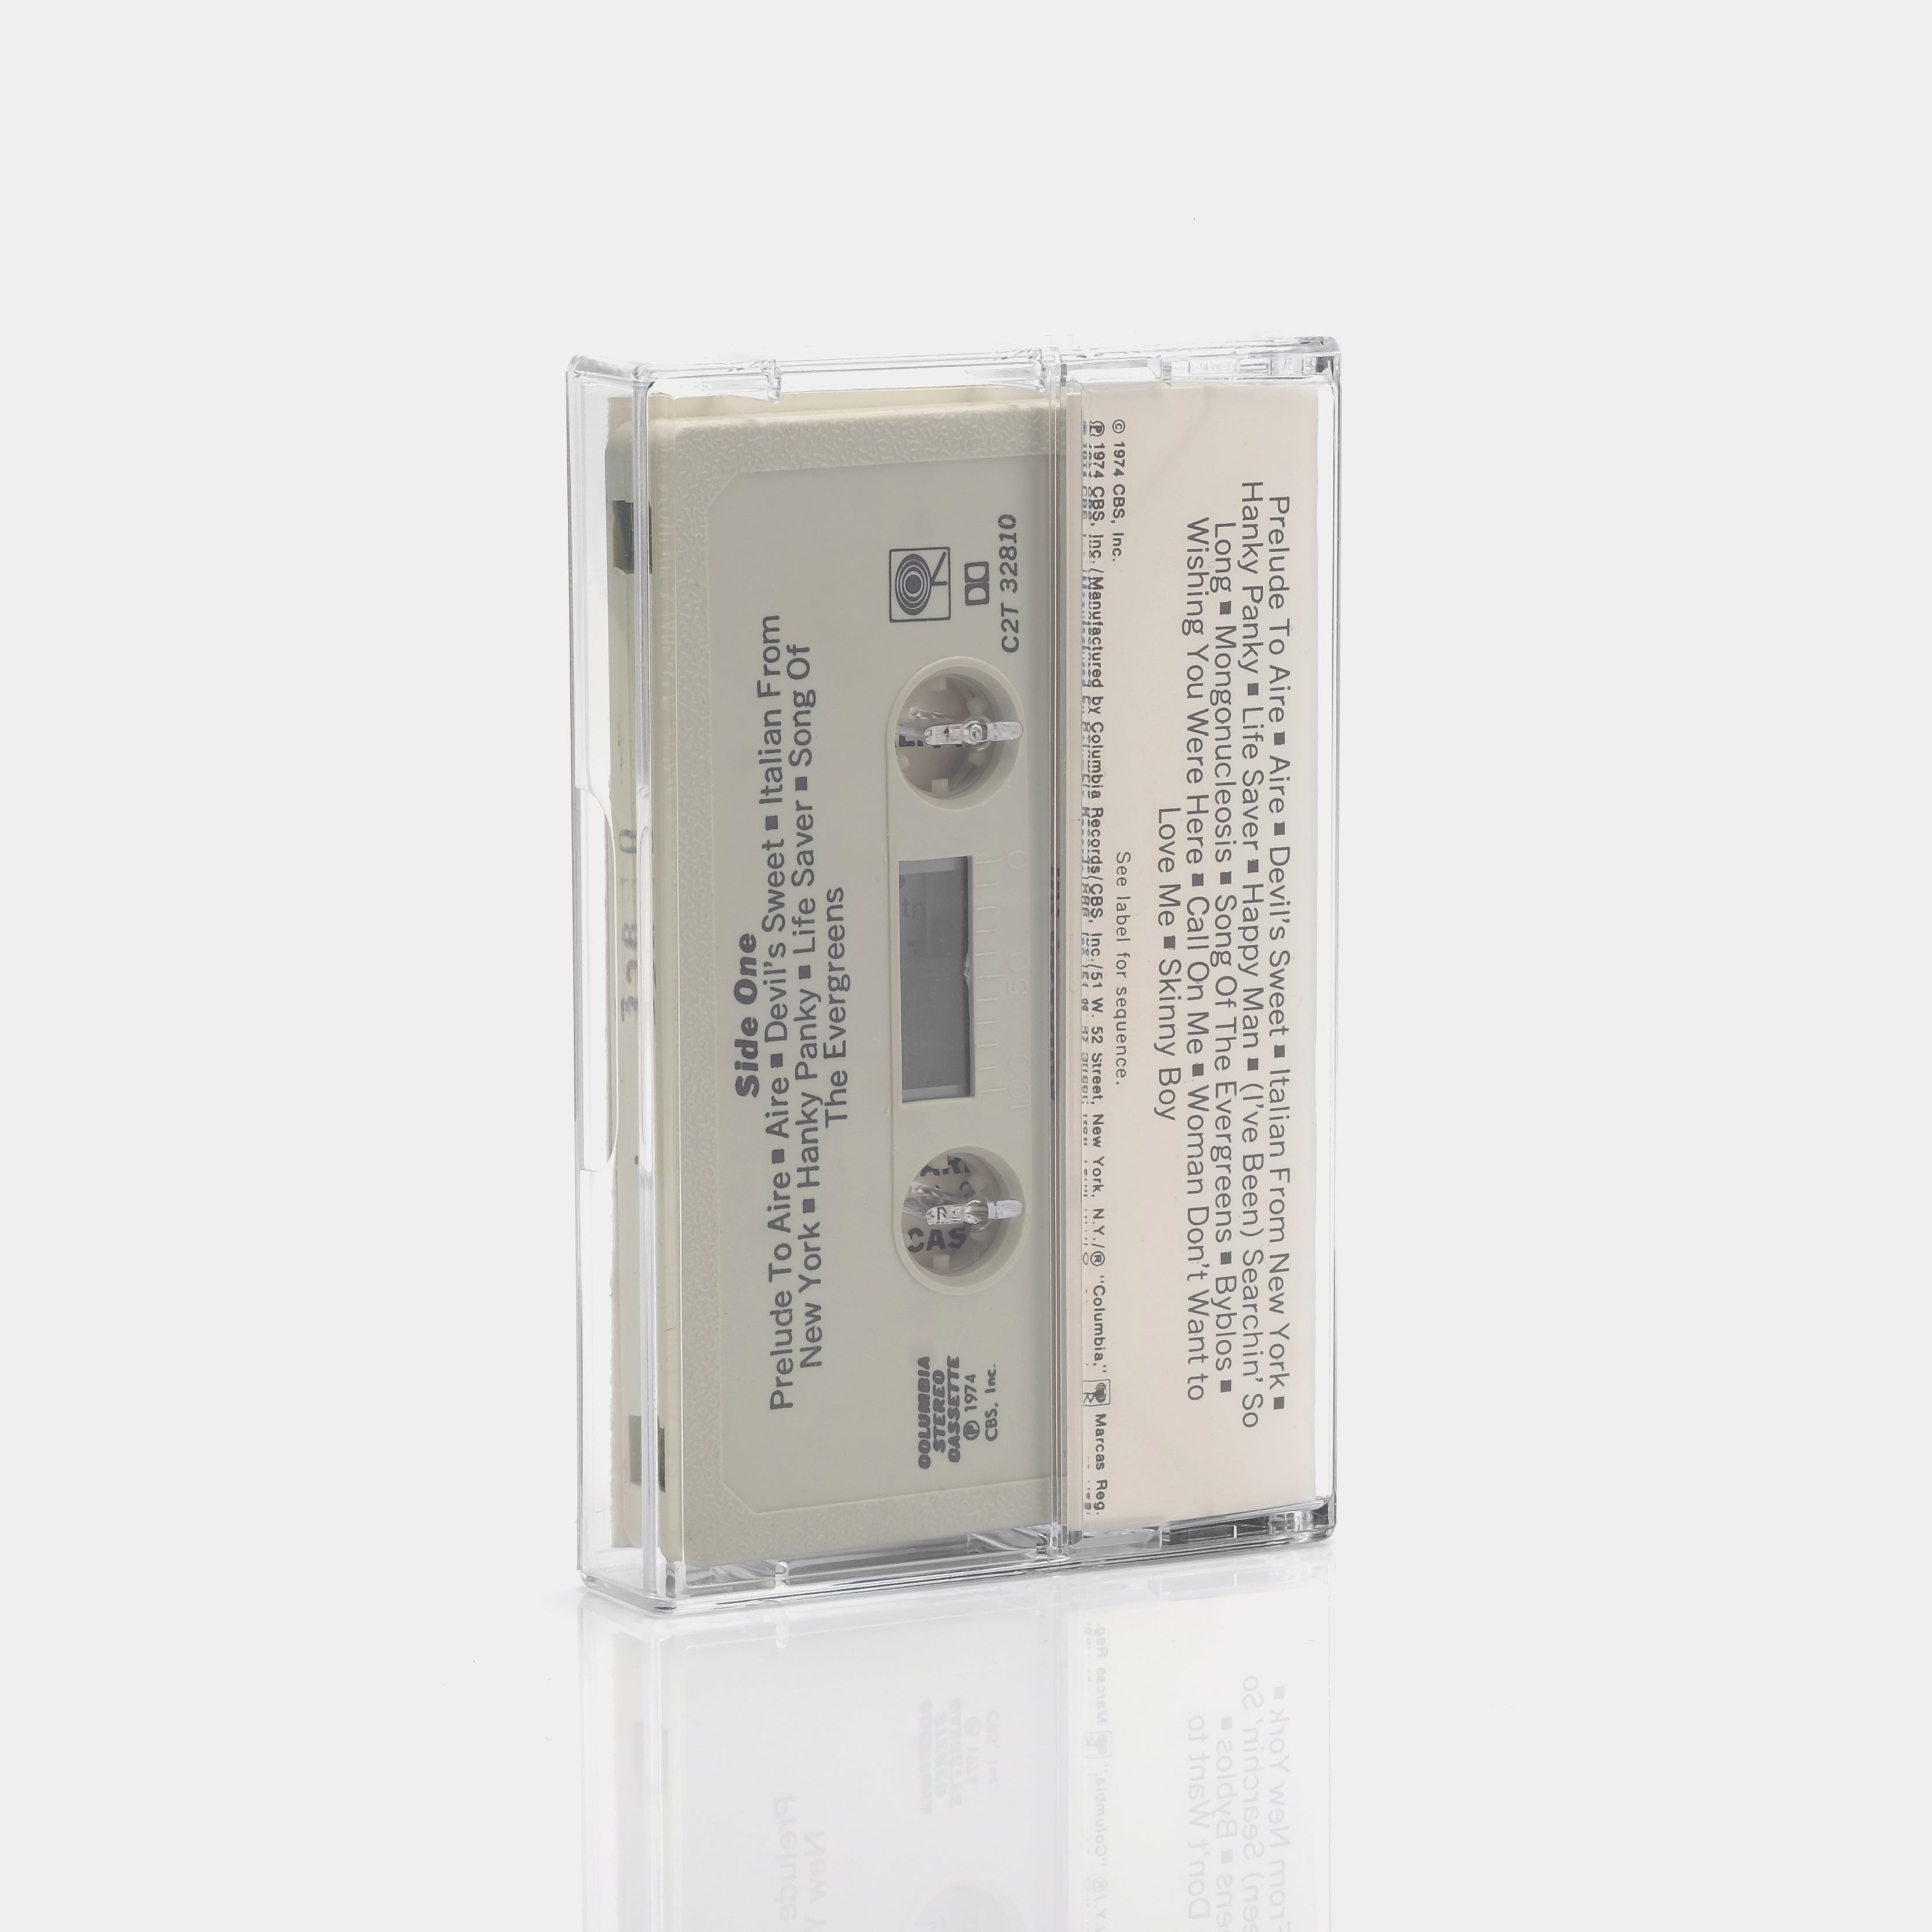 Chicago - Chicago VII Cassette Tape